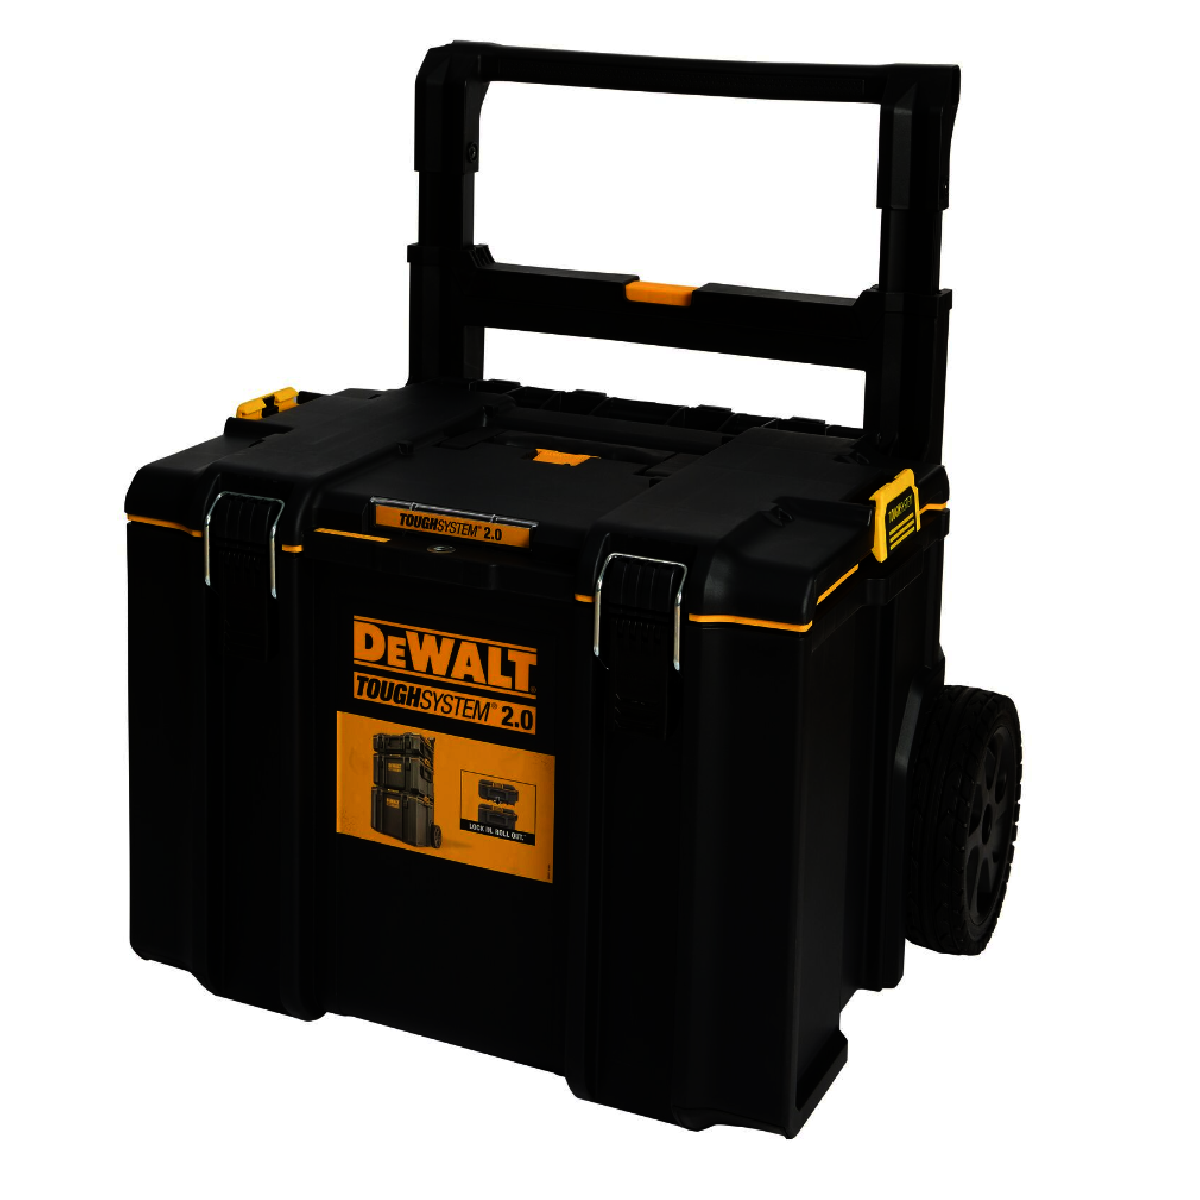 DEWALT, Tough System 2.0 Mobile Storage 250 LB Capacity, Model# DWST08450